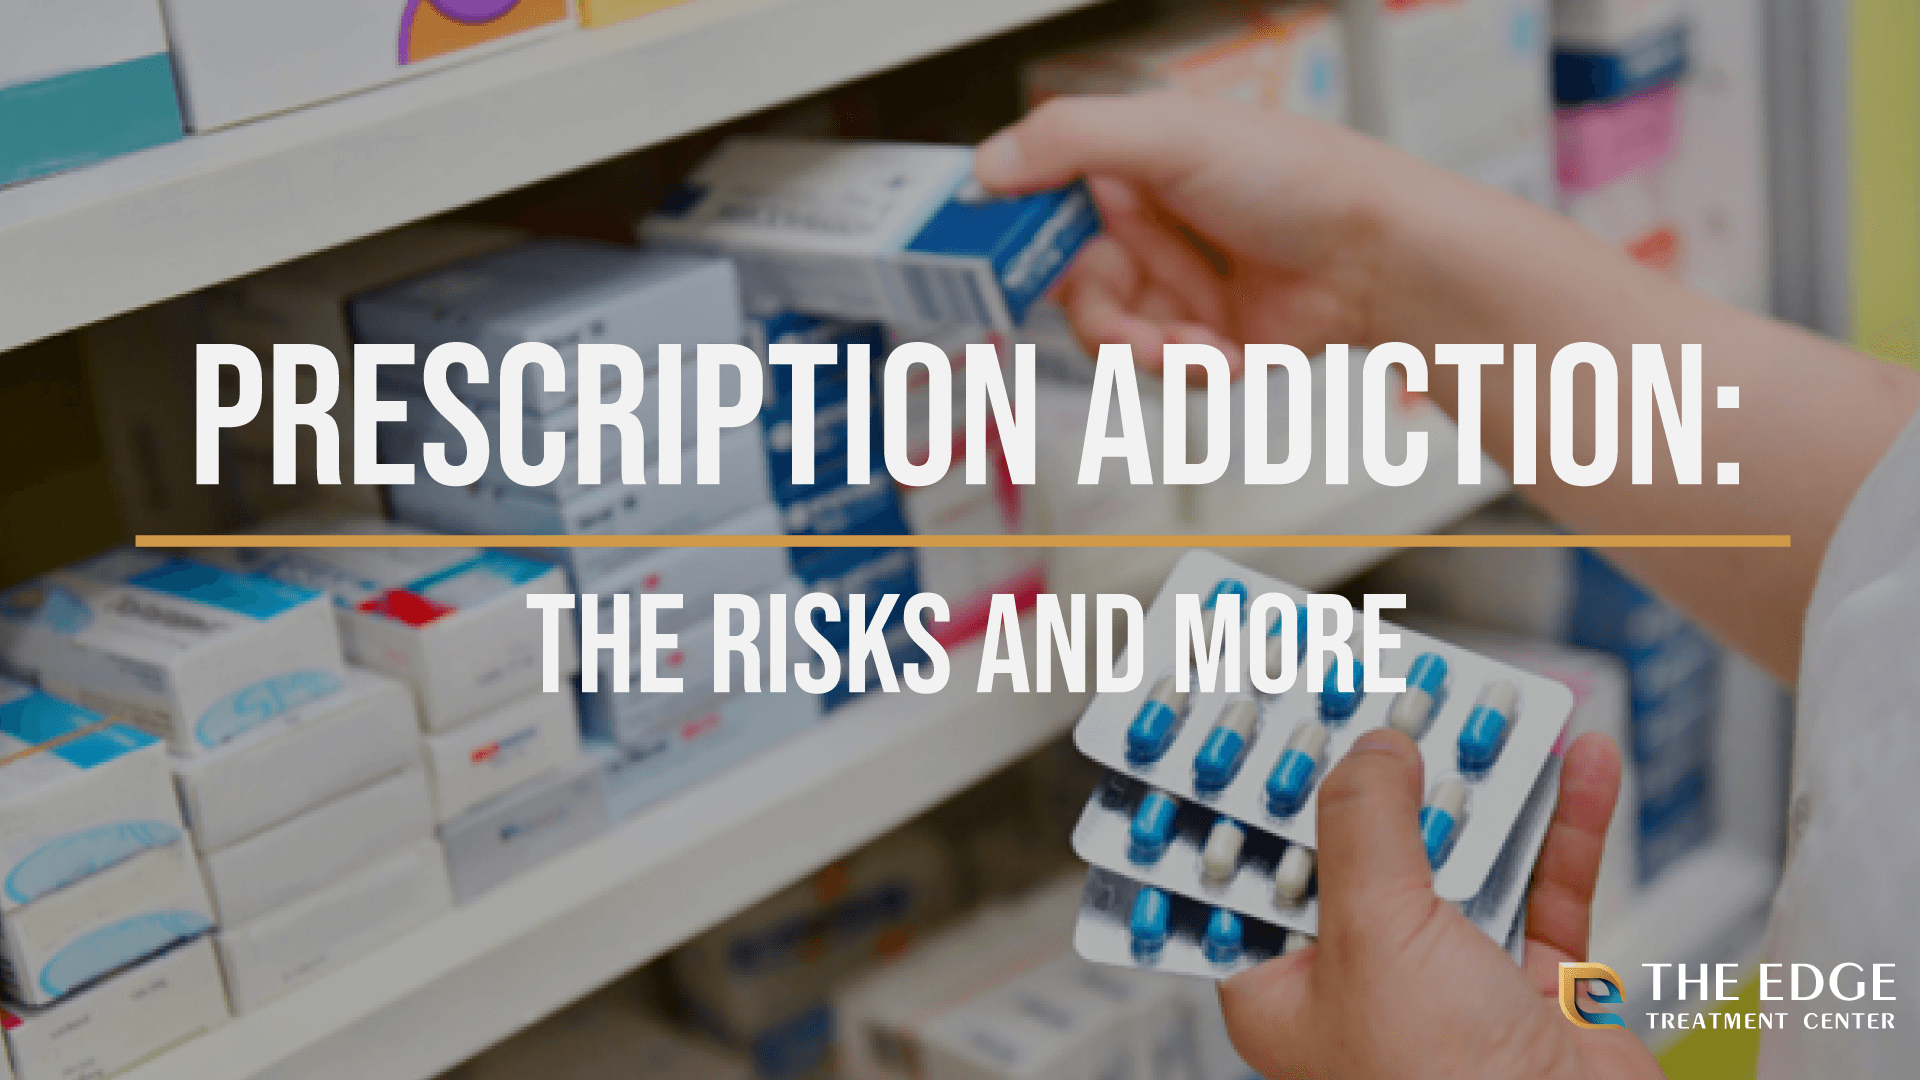 What is prescription addiction?